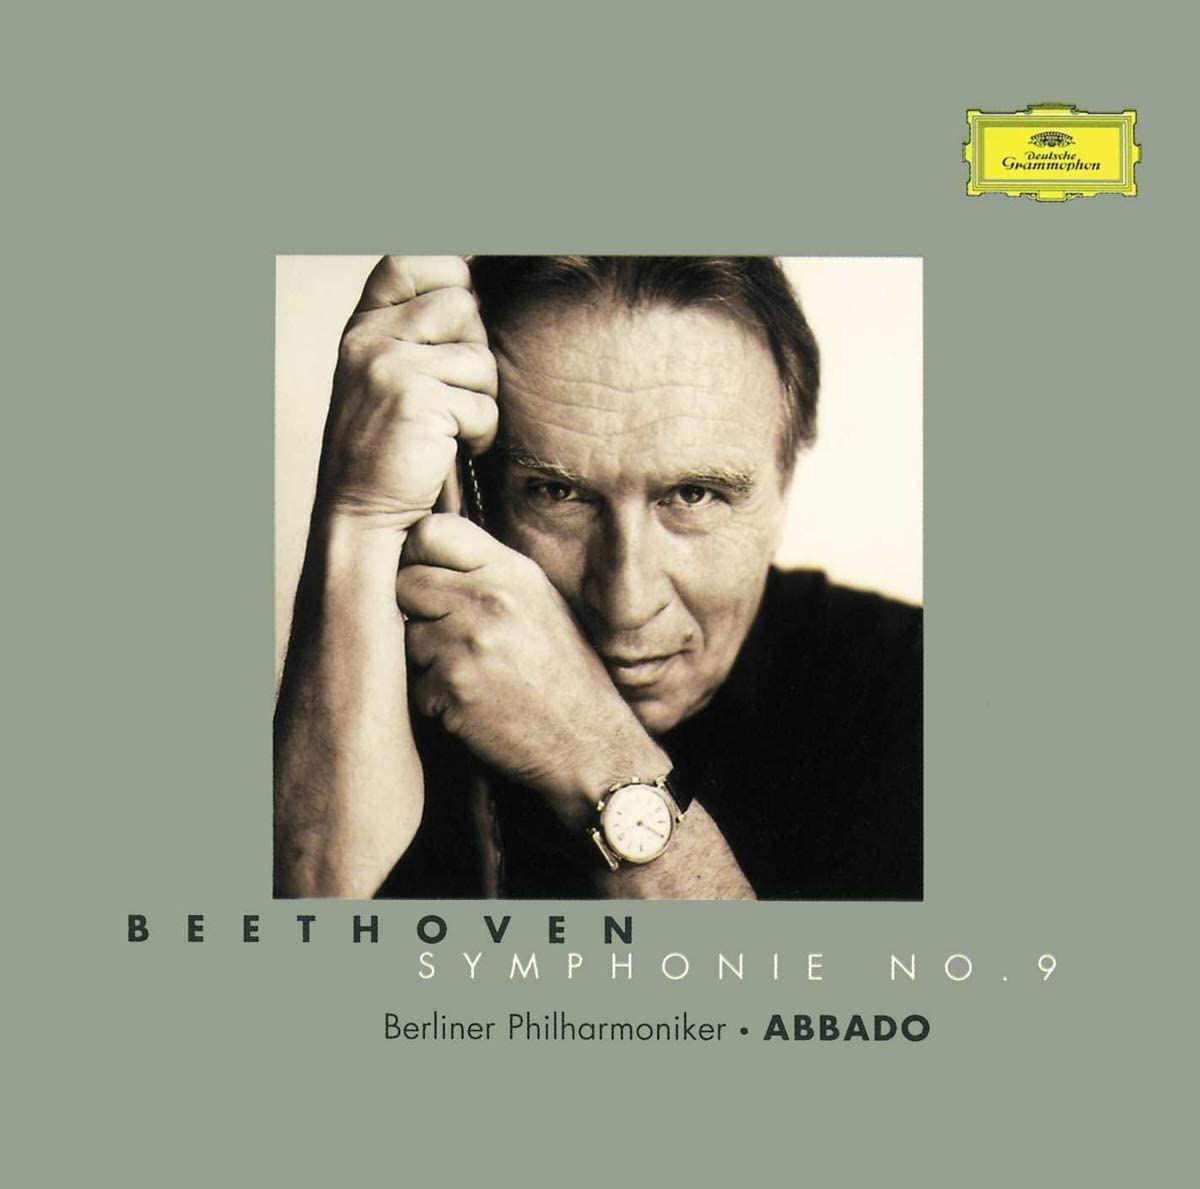 C.Abbado, Berlin Philarmonic Orchestra – Beethoven: Symphony No.9 (2000/2003) [Official Digital Download 24bit/96kHz]